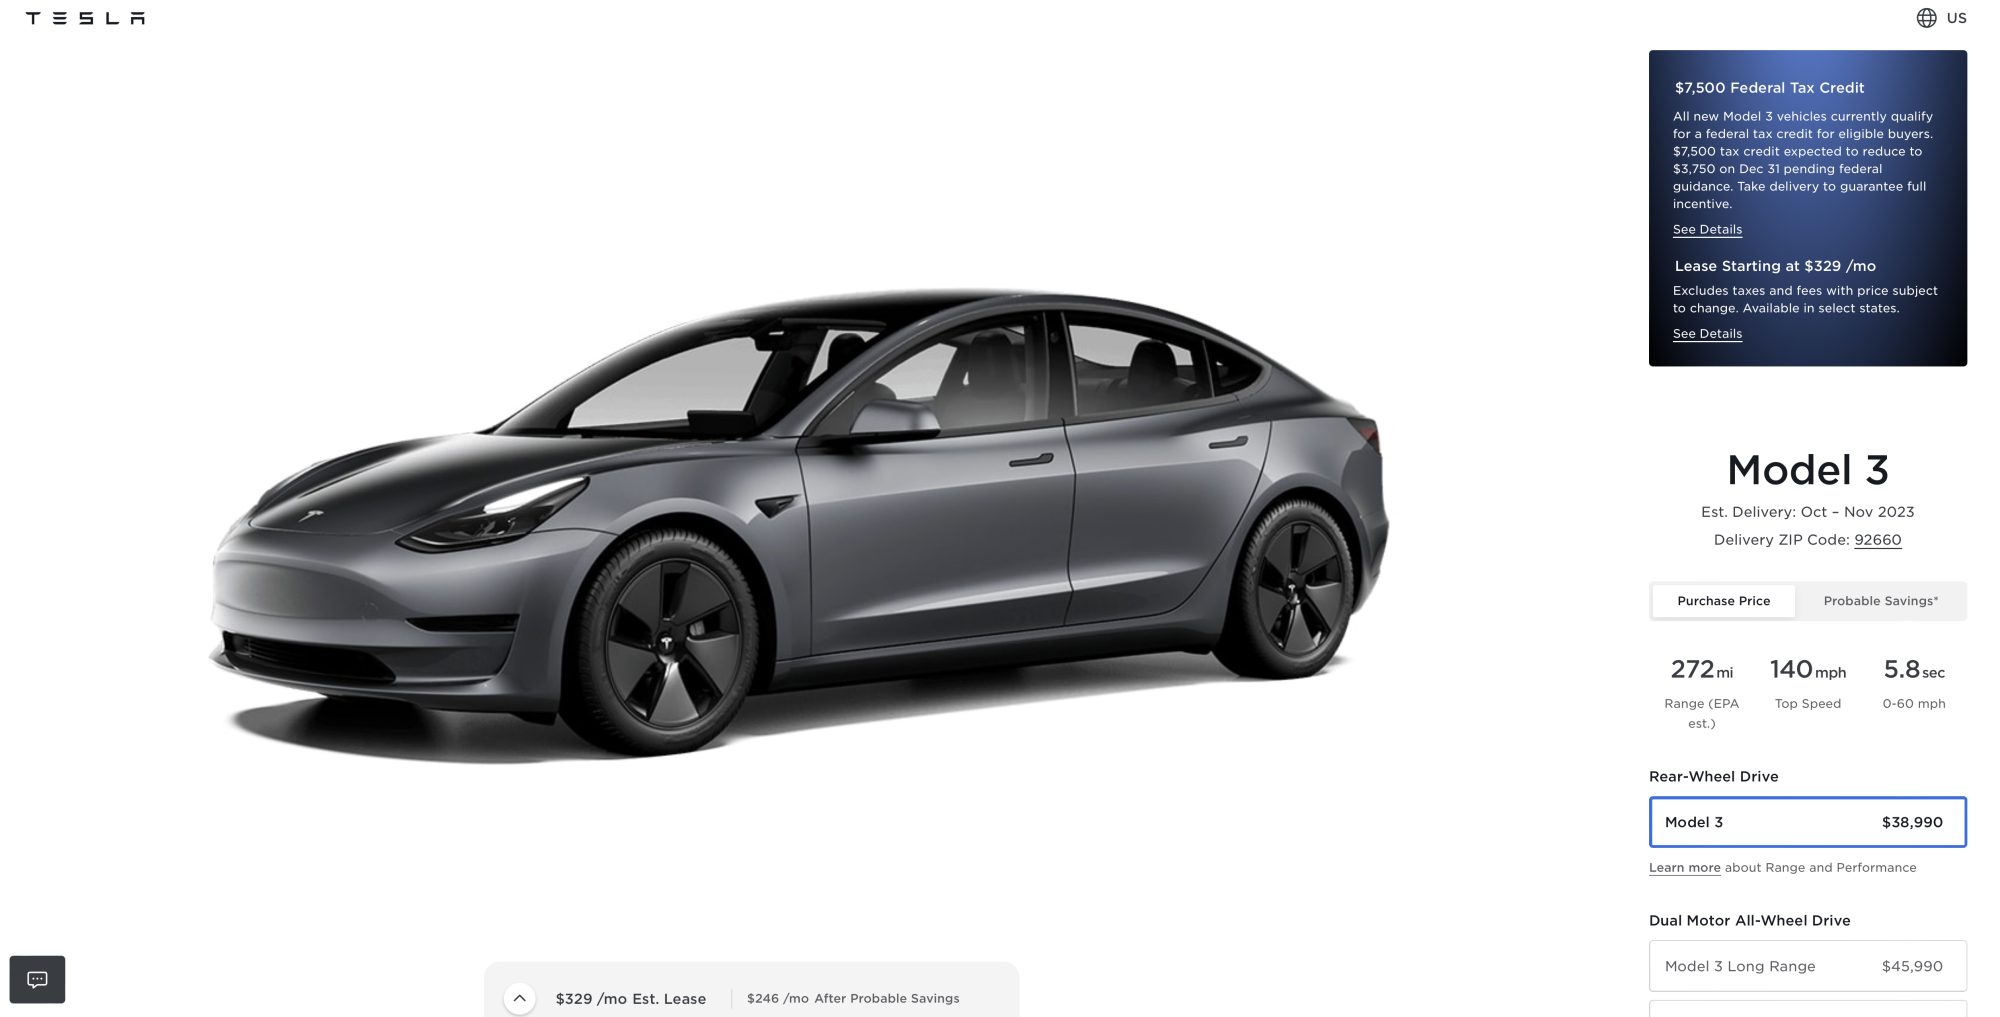 2024 Tesla Model 3 Highland Lease Has Same Price At $329/mo